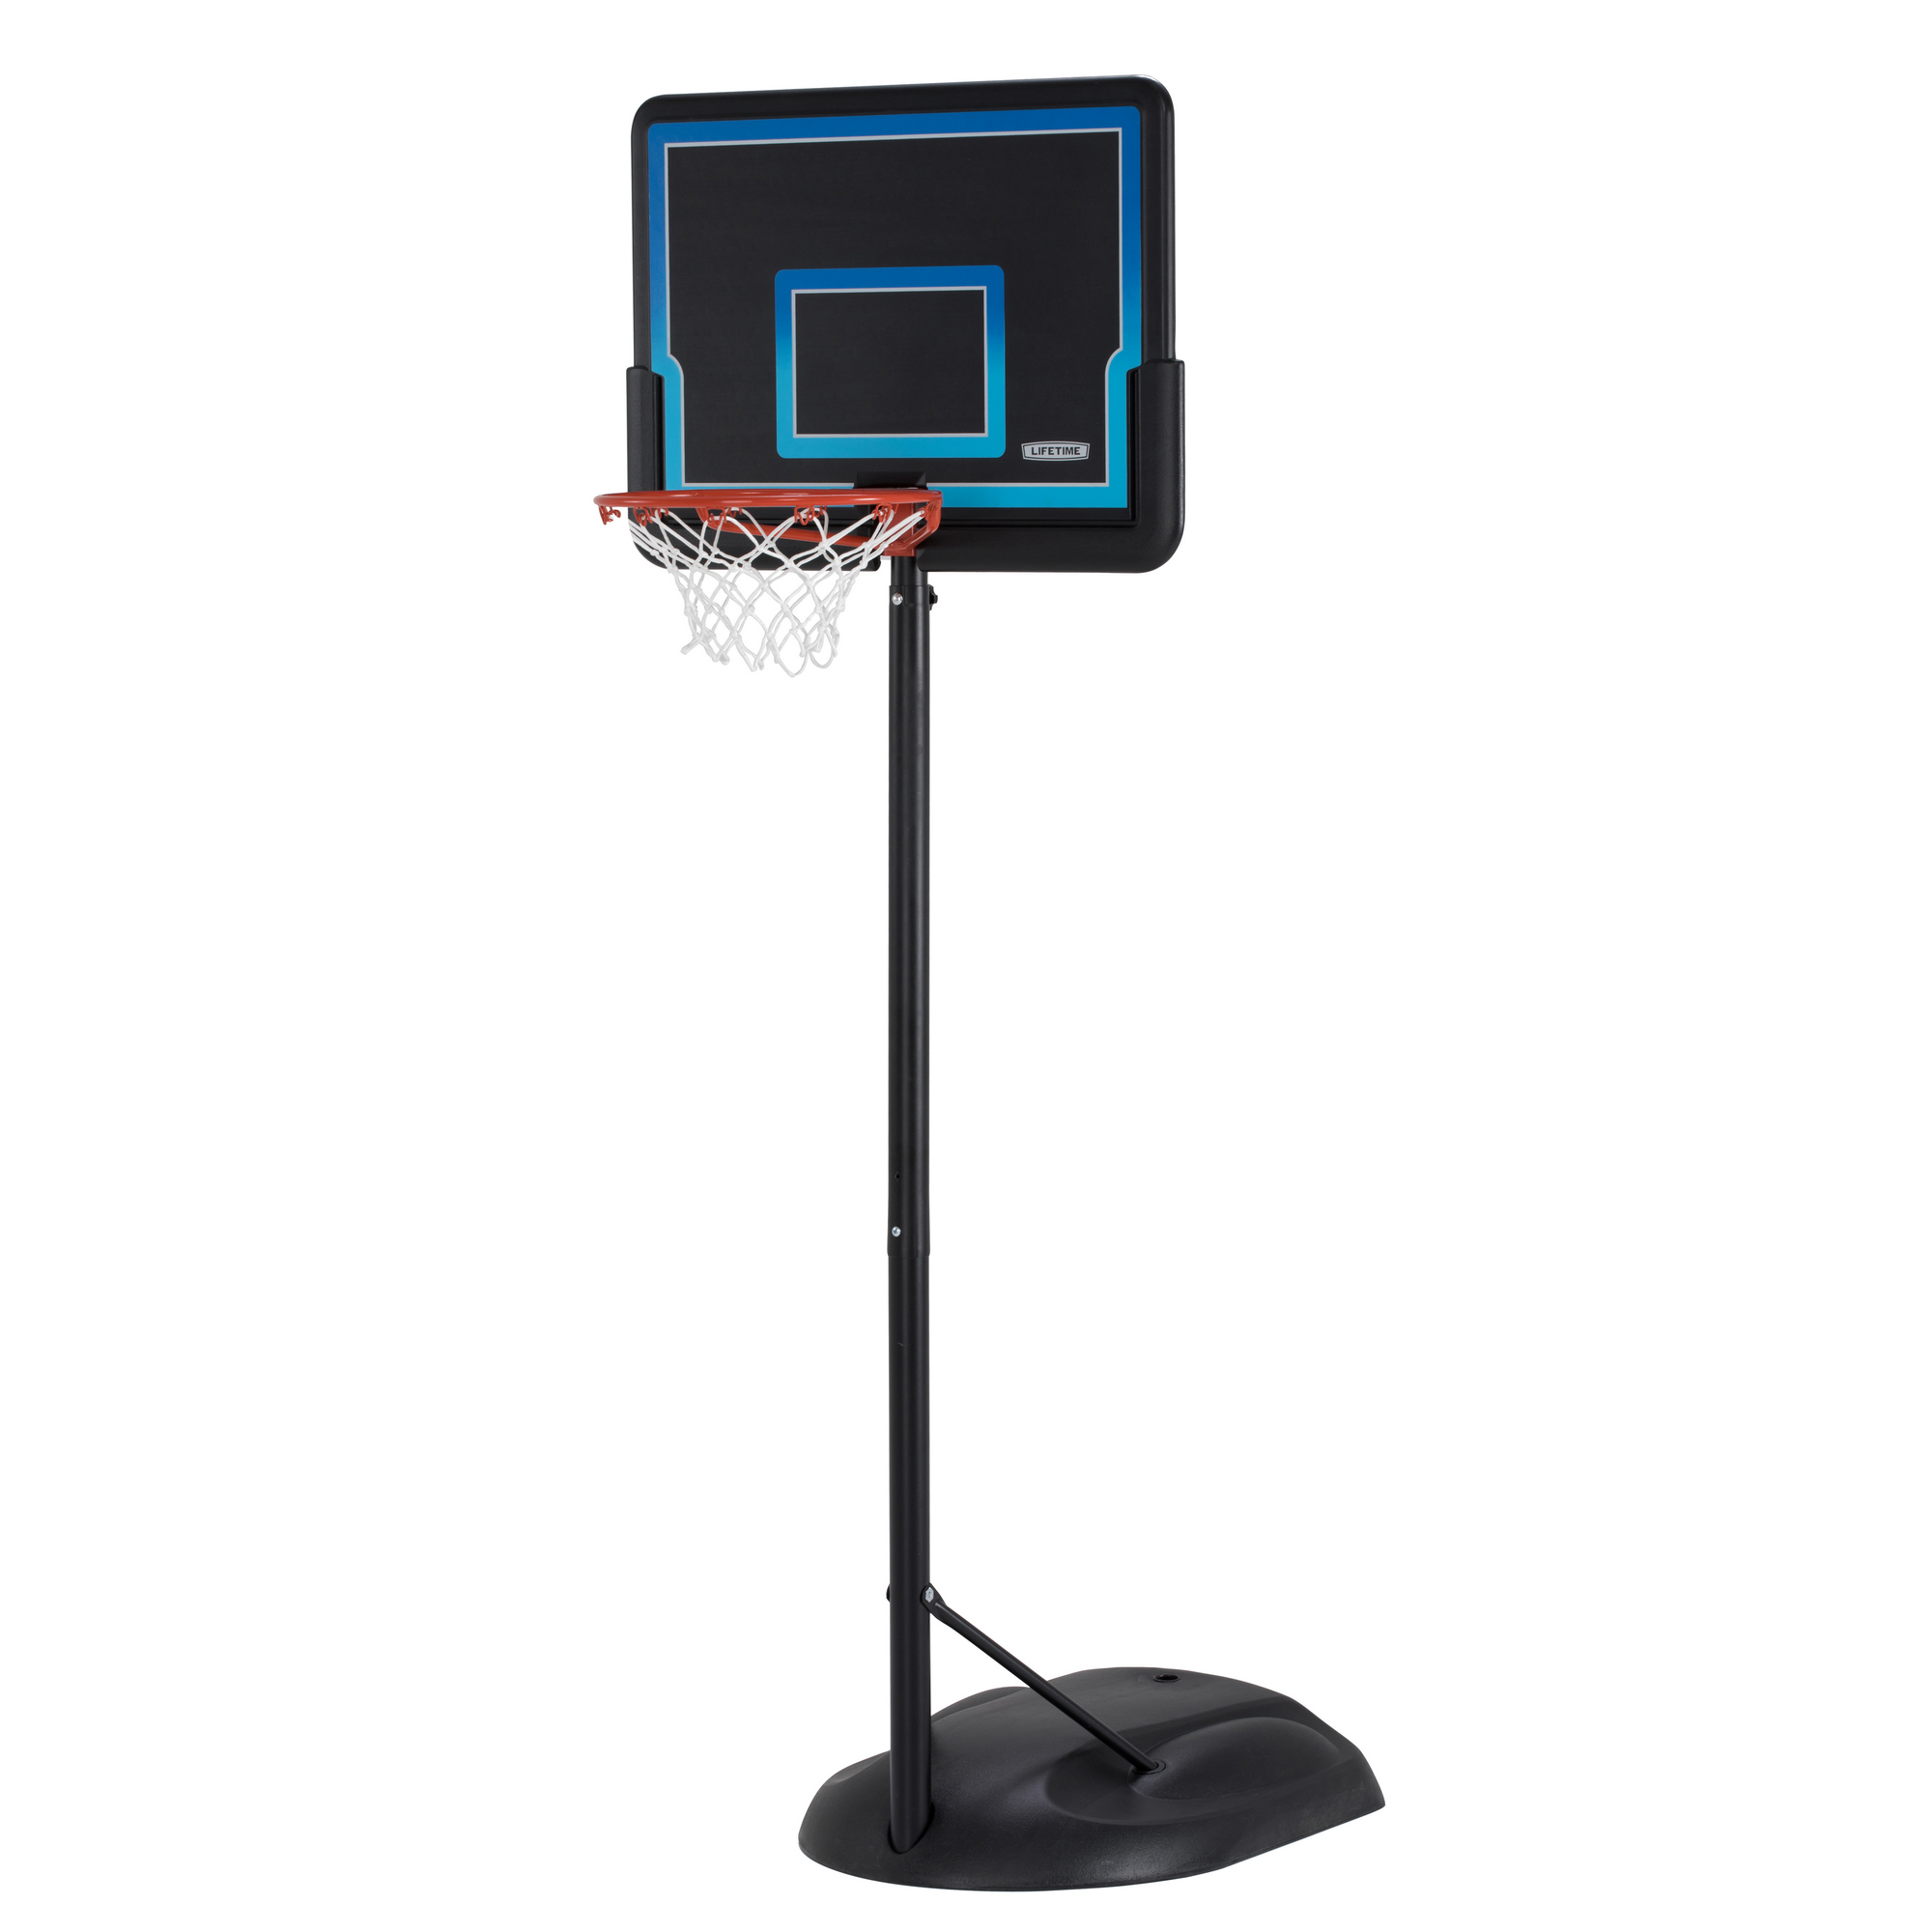 Basketballkorb 'Hawaii' schwarz/blau mit Standfuss 81 x 229 cm + product picture